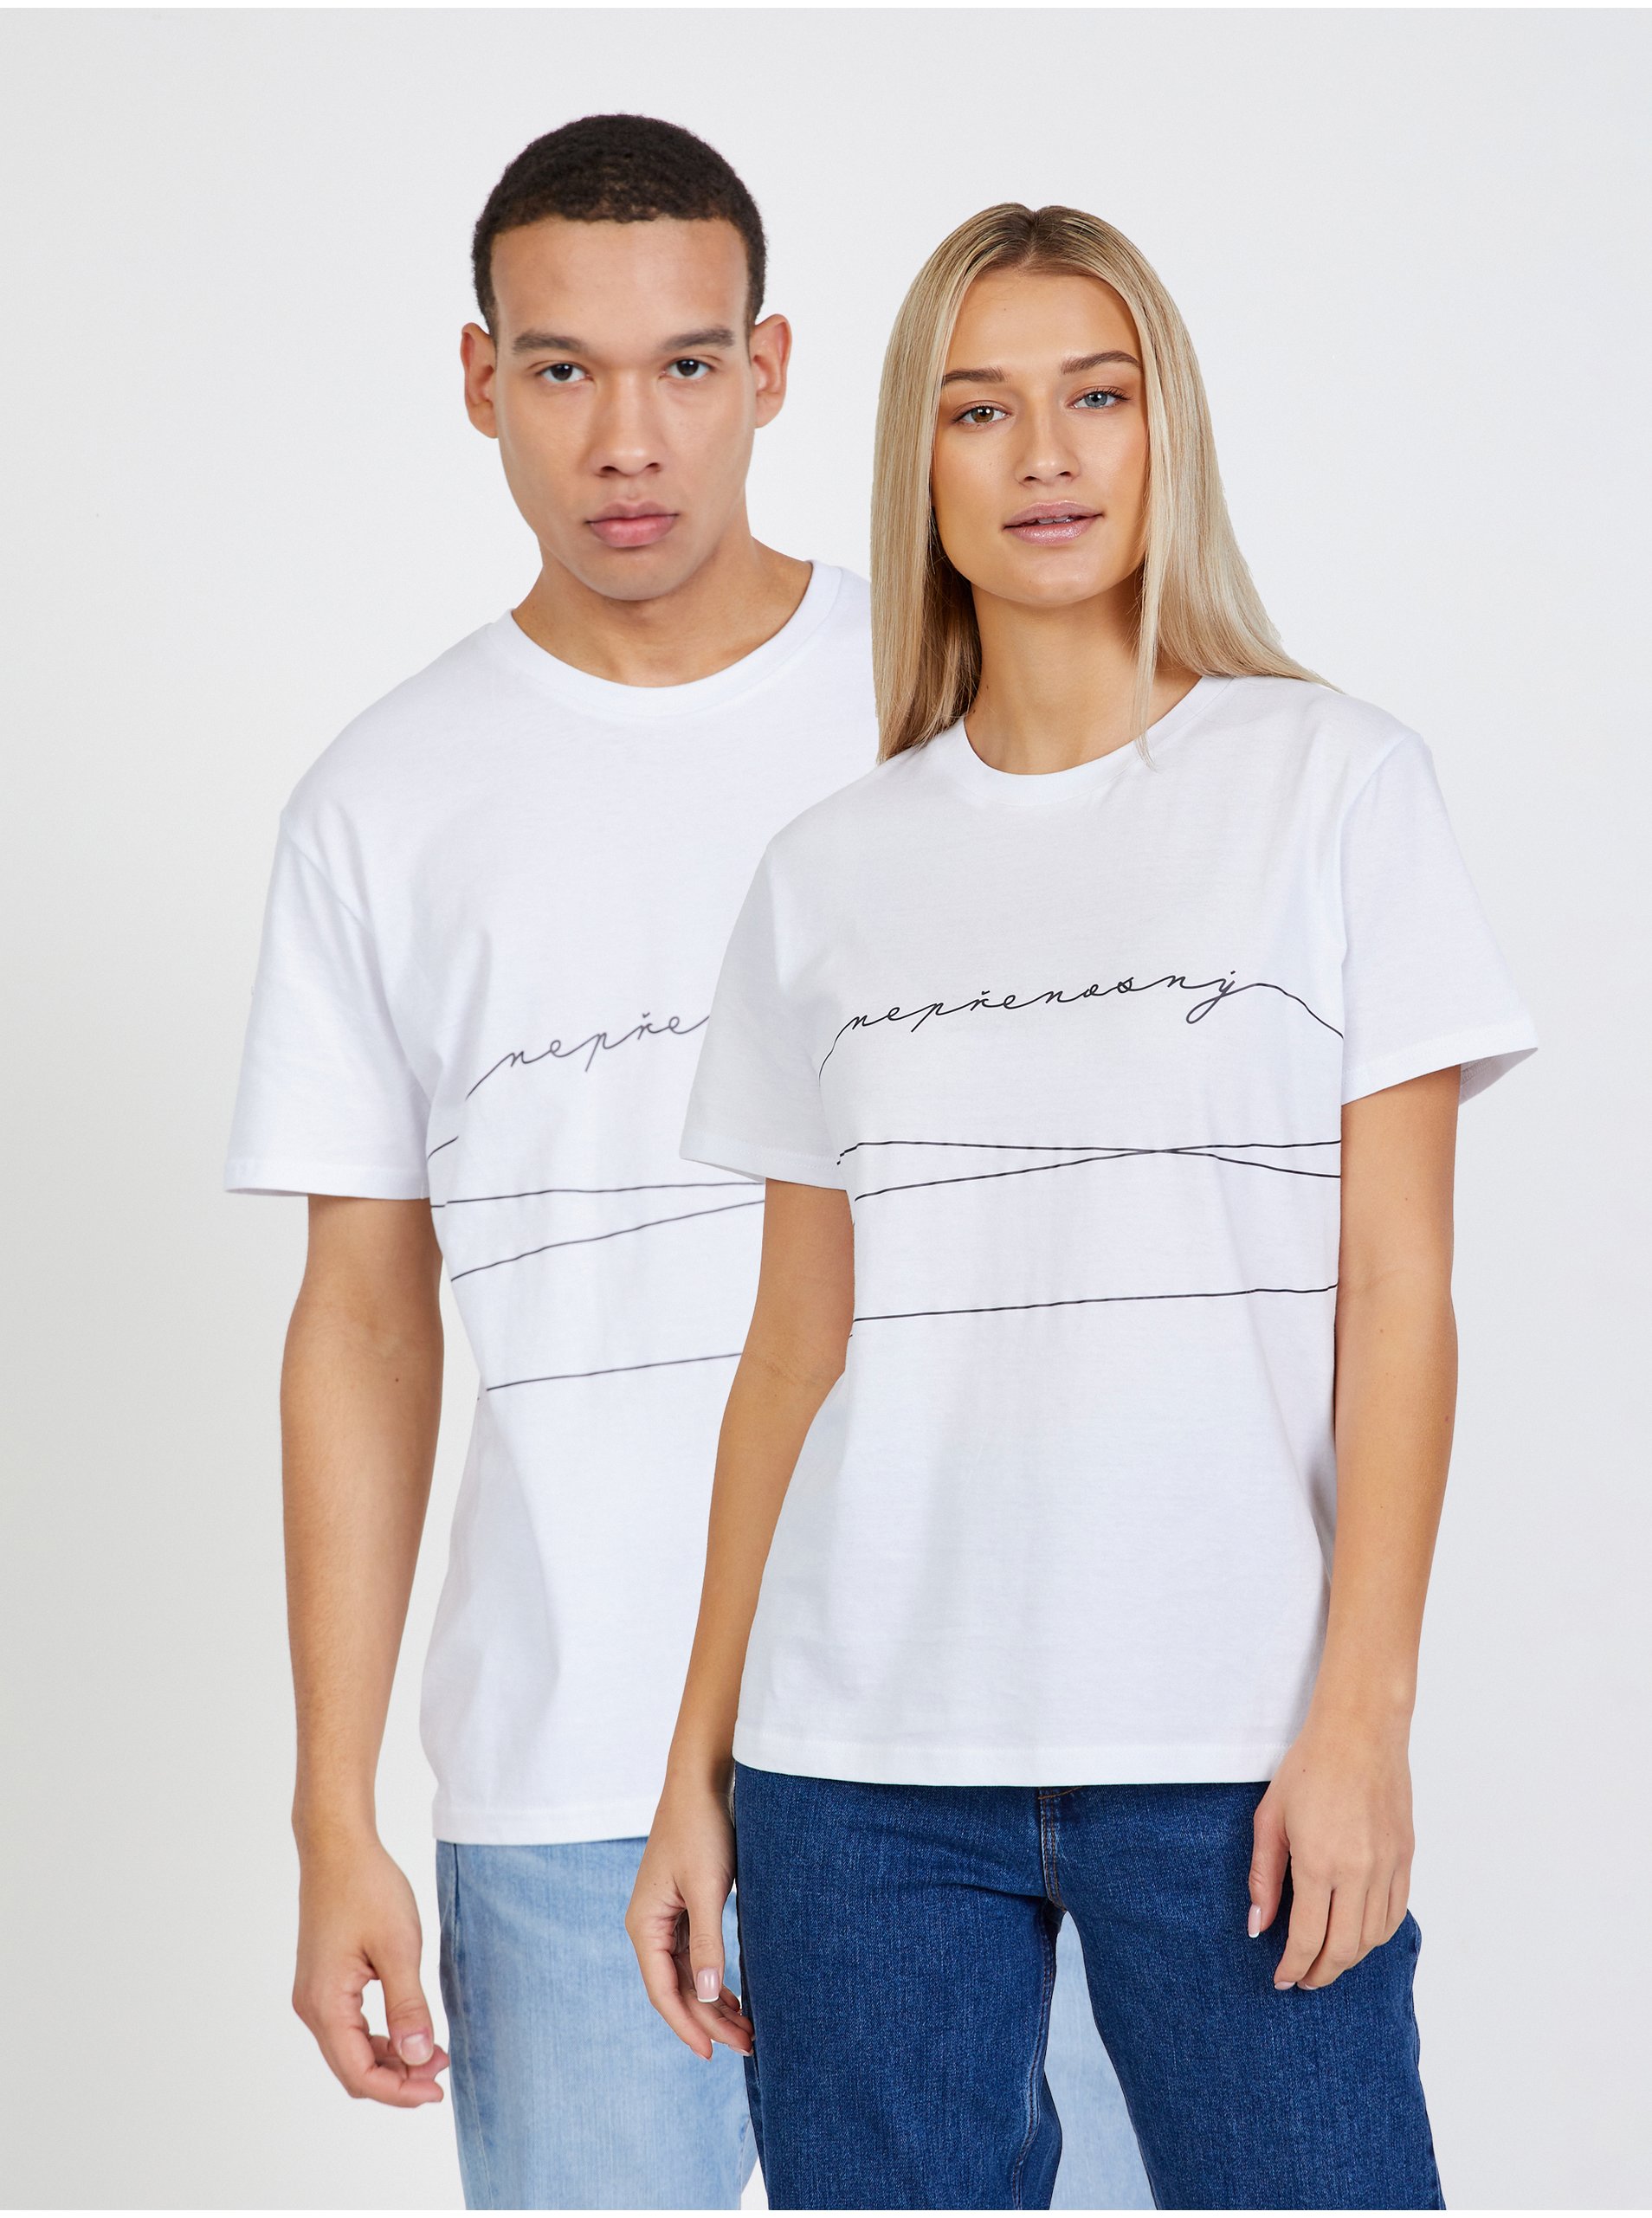 E-shop Biele unisex tričko Dobro. Destigmatizace HIV DOBRO.